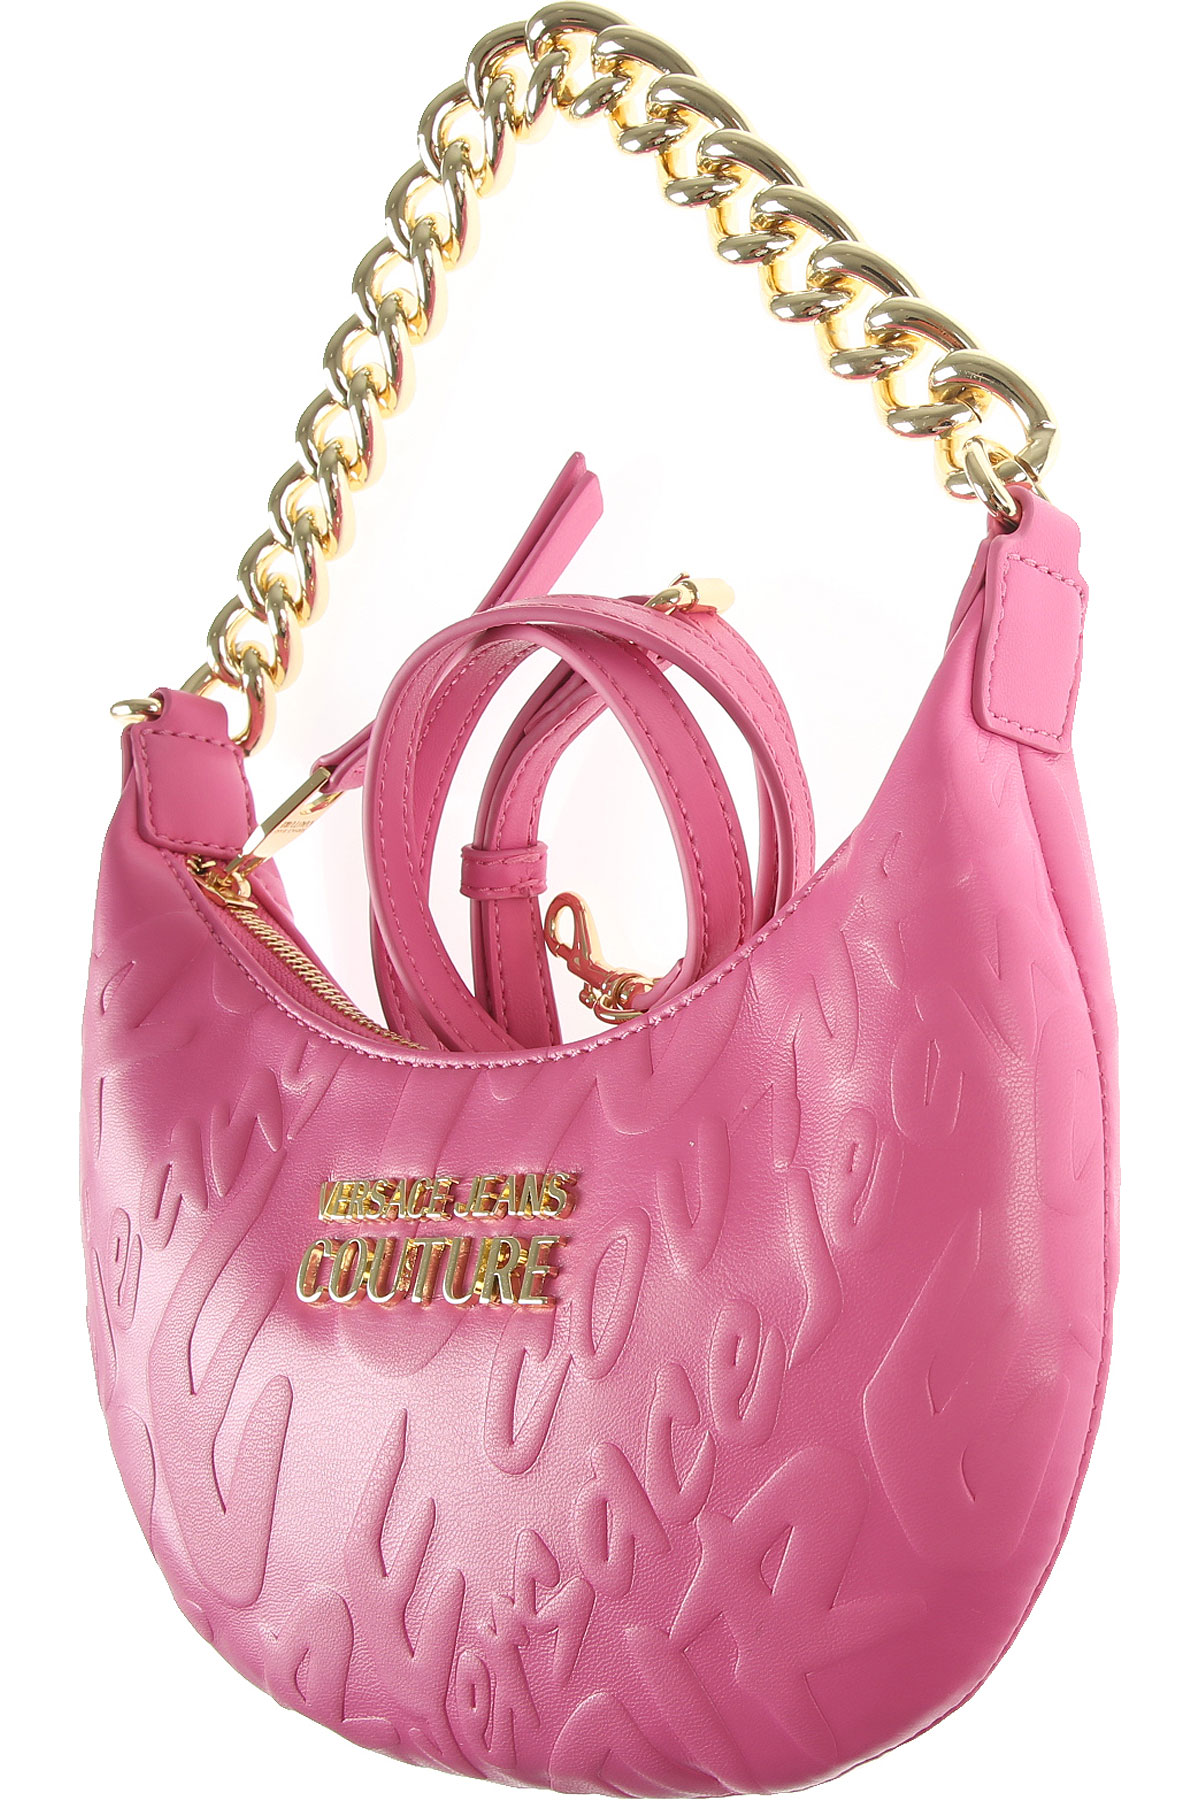 Handbags Versace Jeans Couture , Style code: 73va4bz1-zs495-311